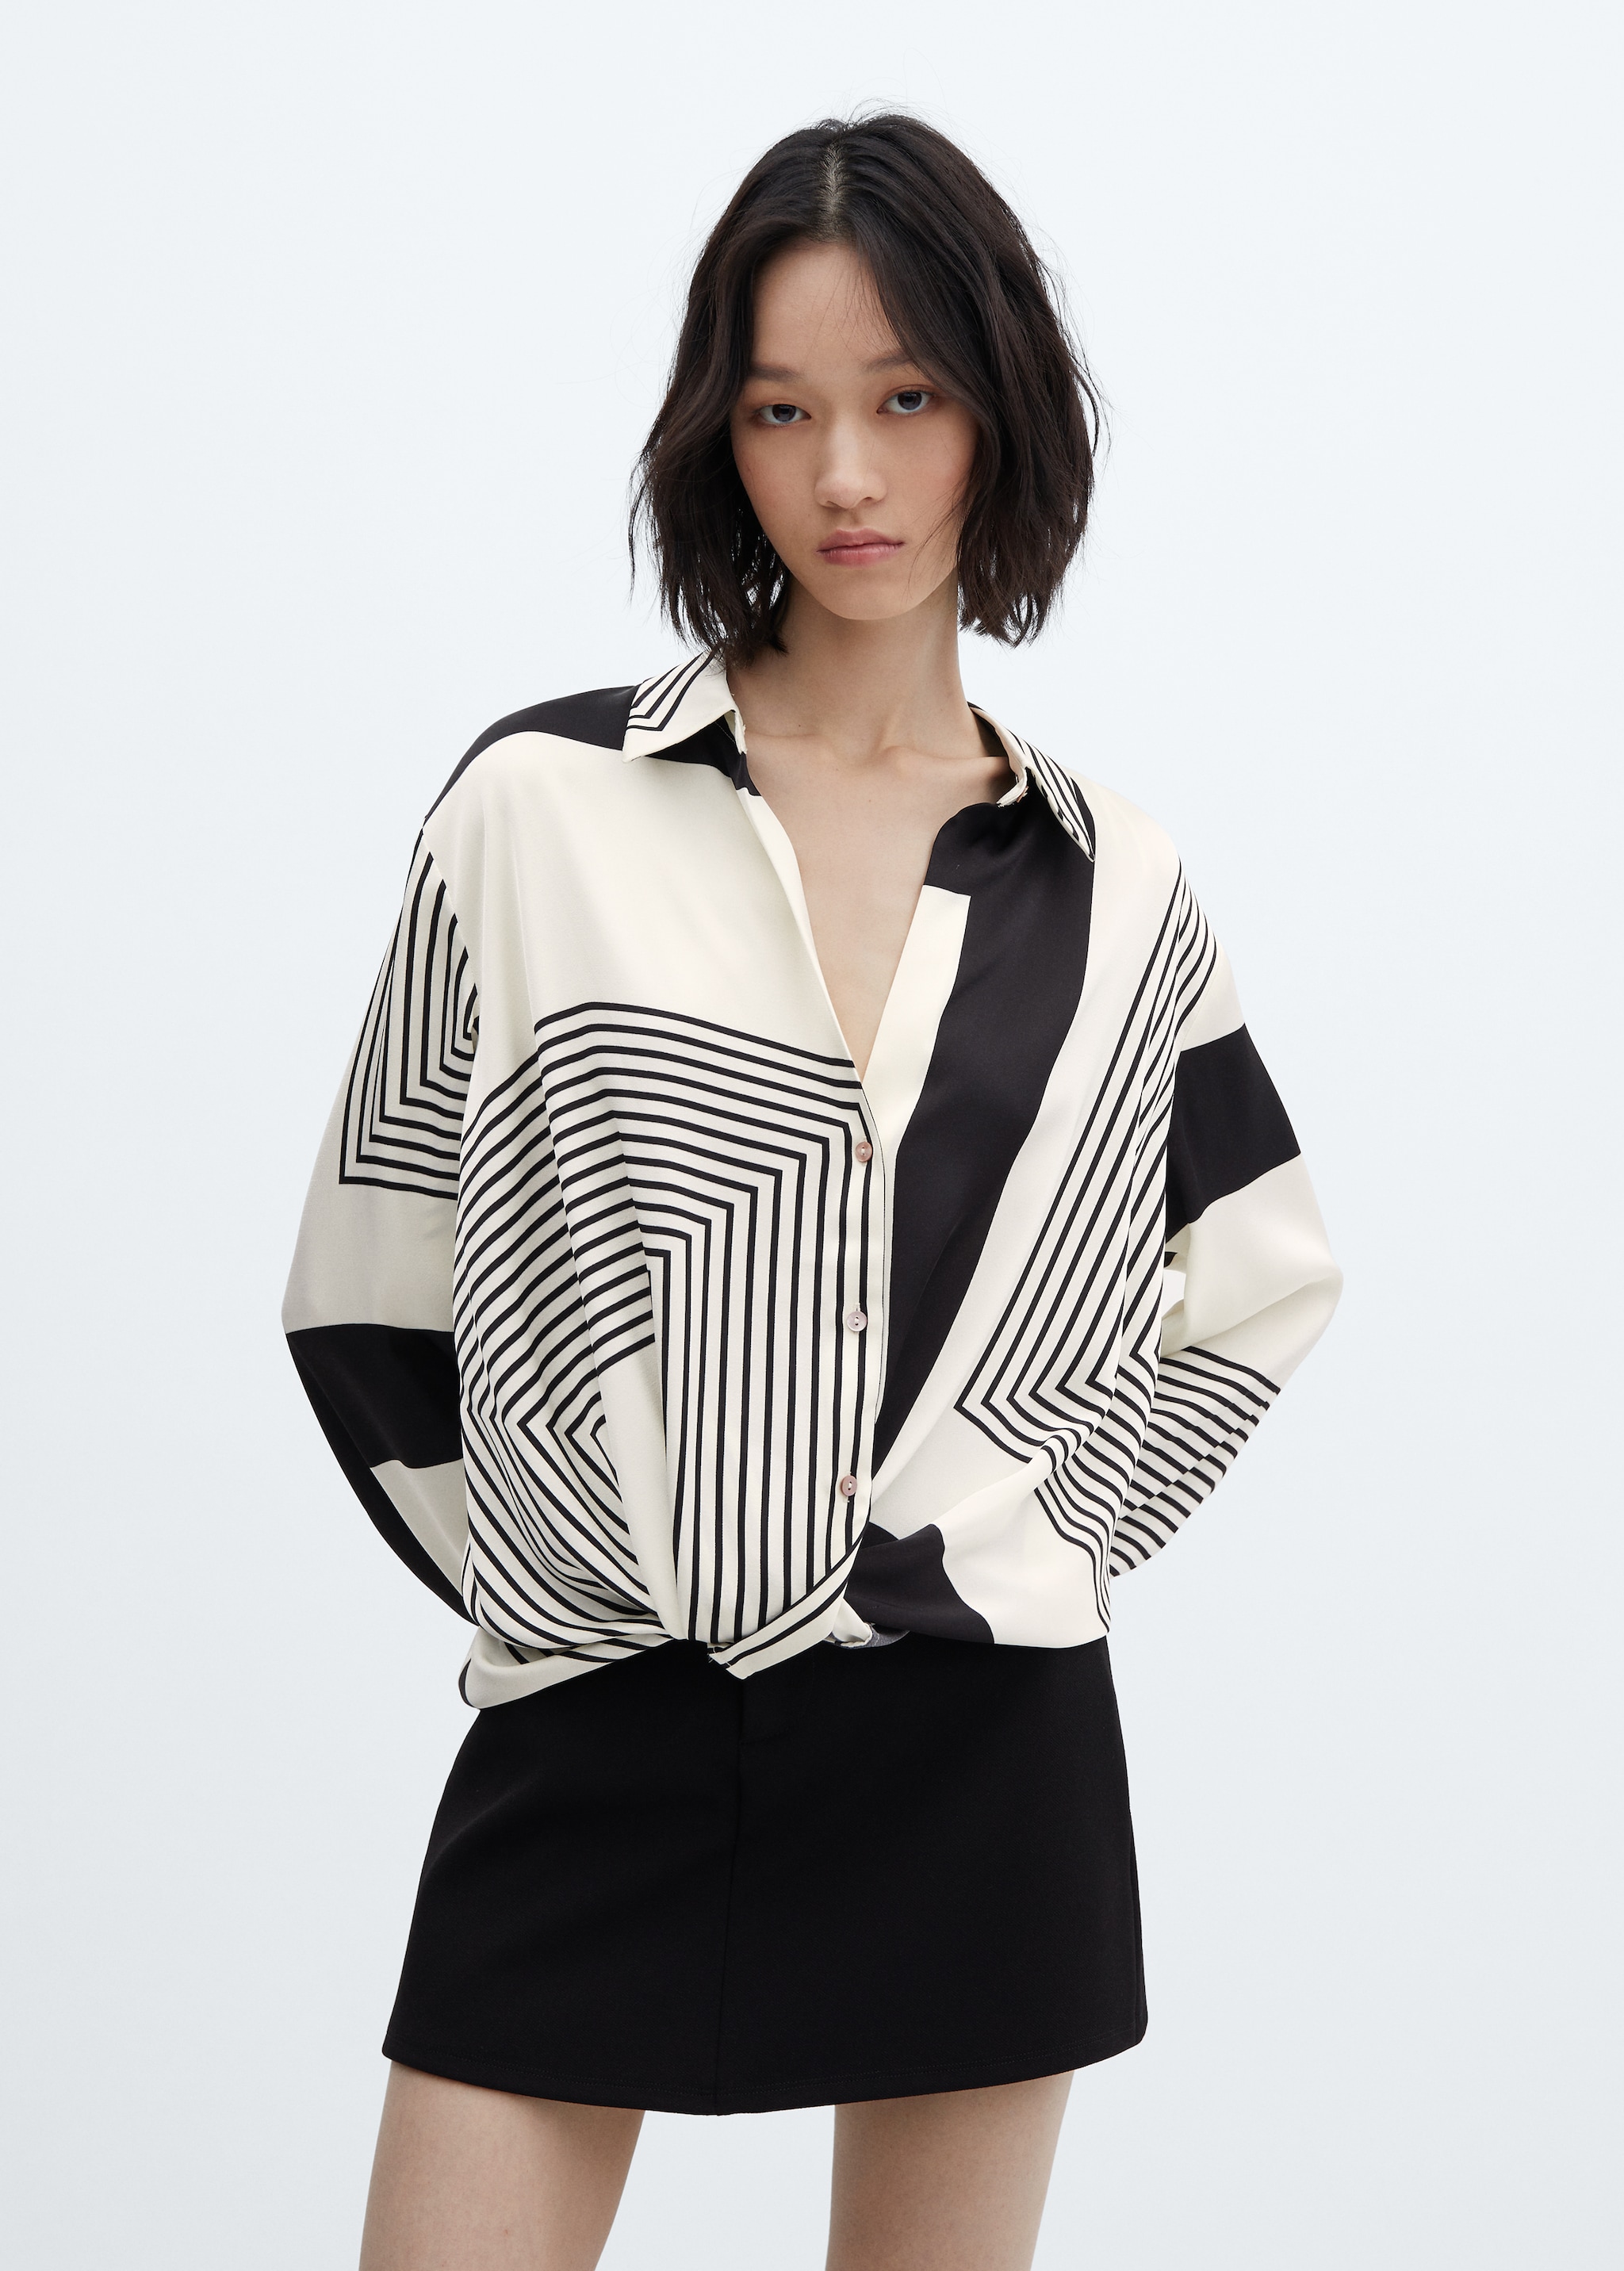 Stripe-print shirt - Medium plane